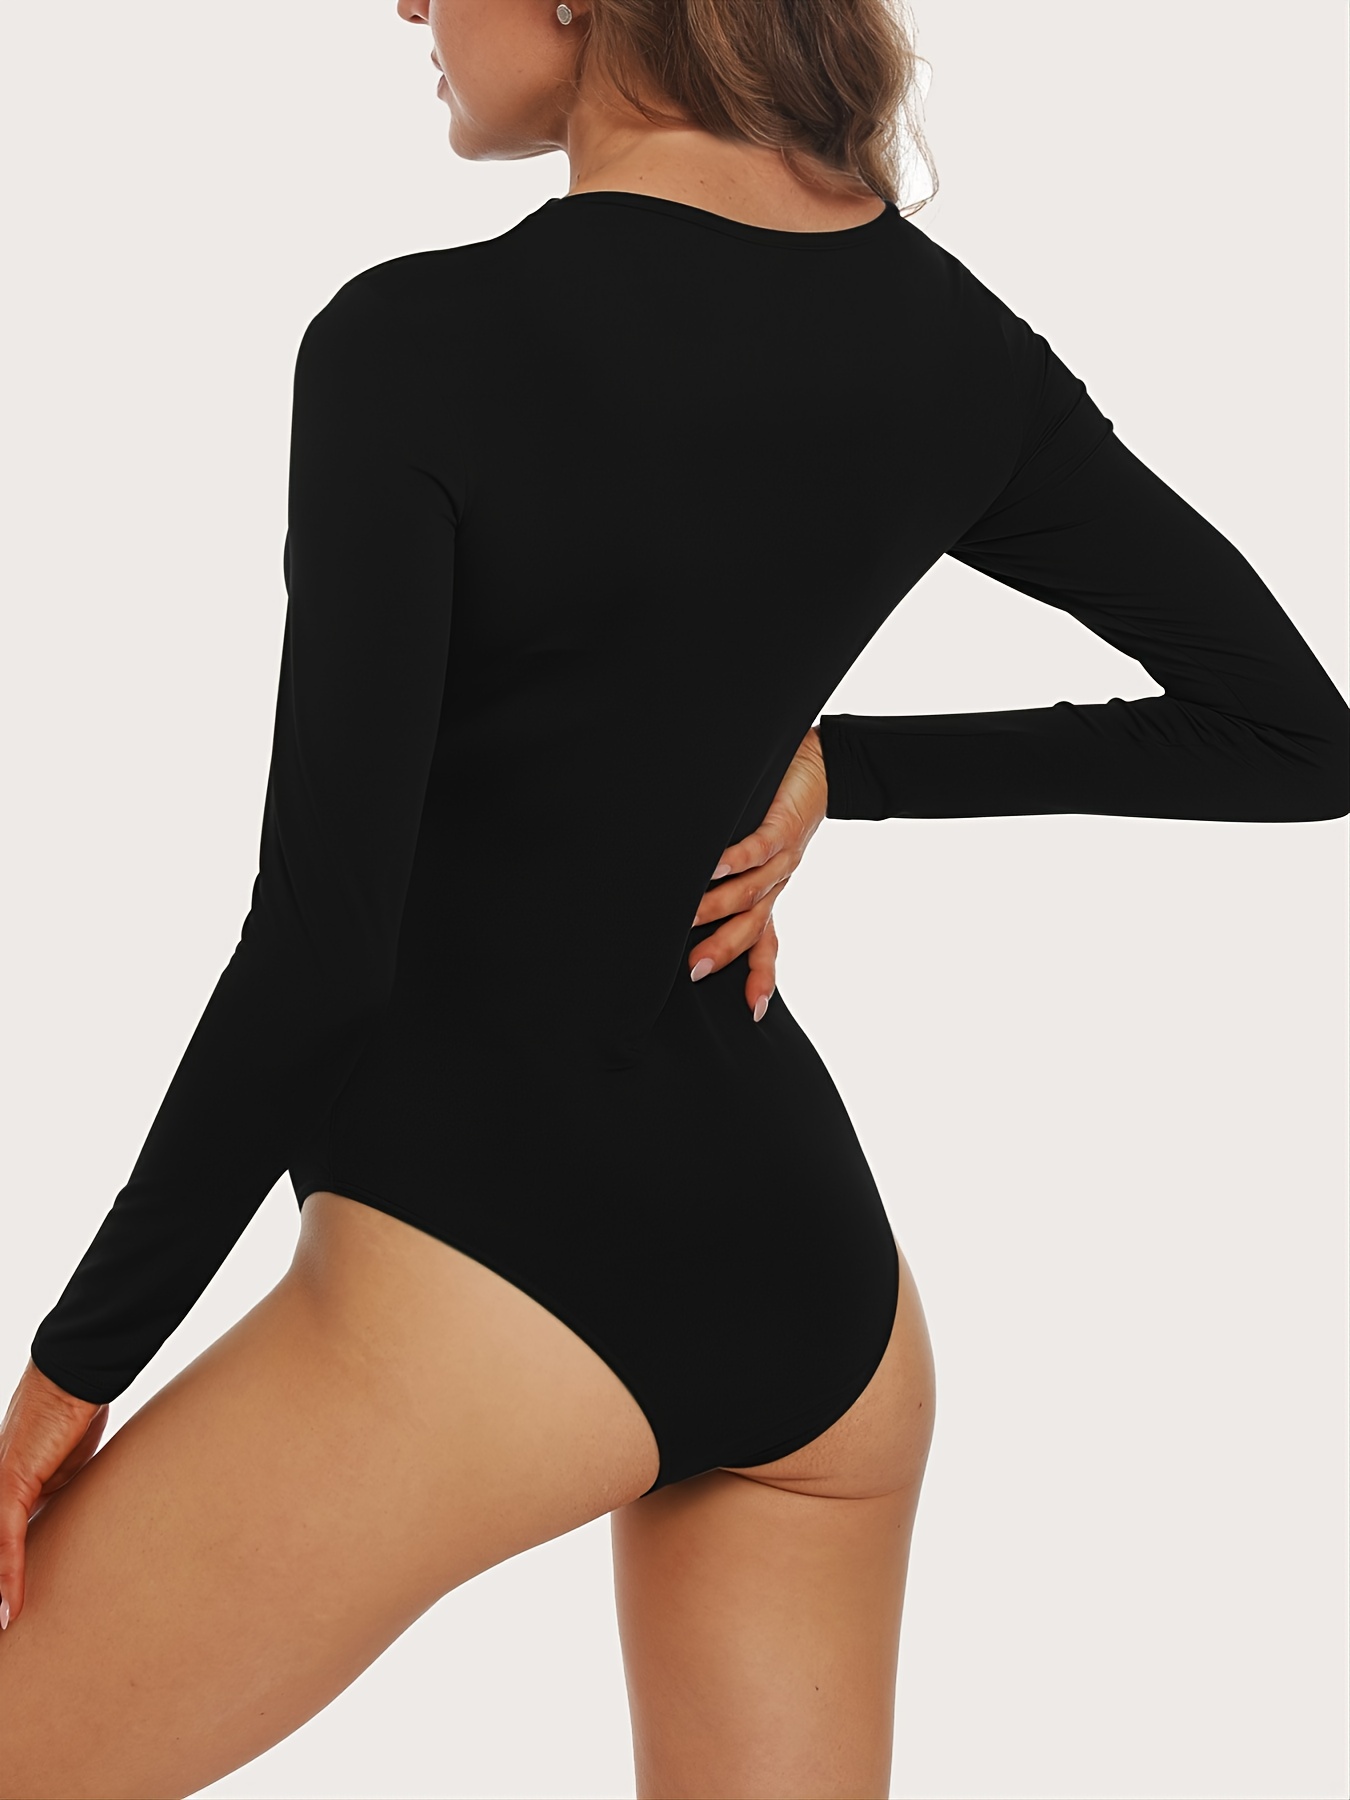 XEHURO Womens Long Sleeve Bodysuit Square Neck One Piece Bodysuit